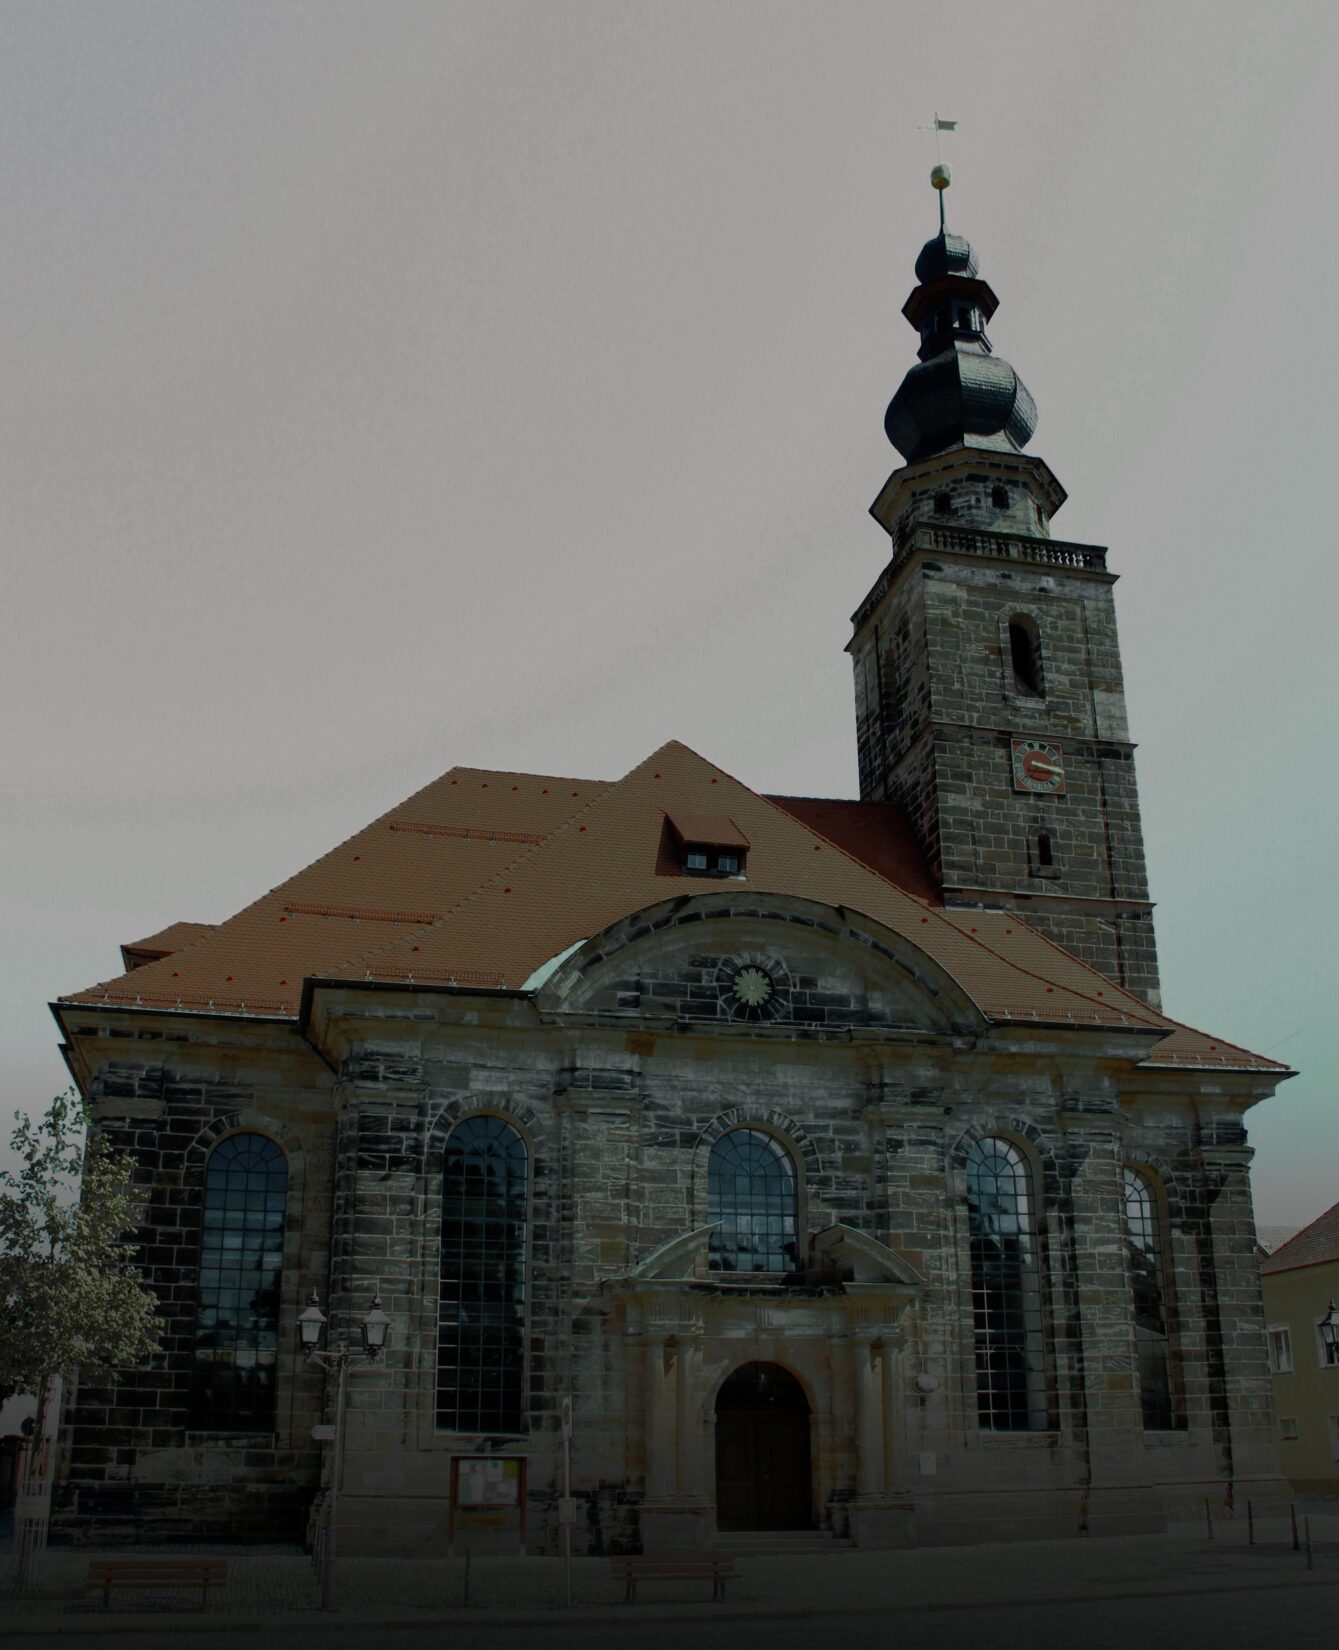 Ordenskirche Bayreuth